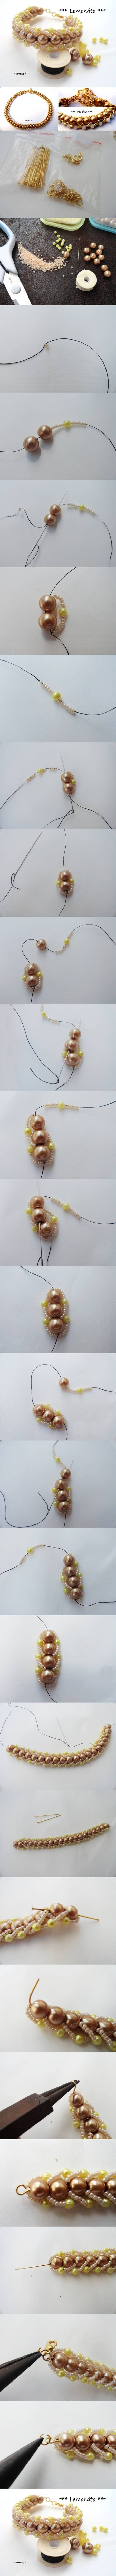 DIY Elegant Beads Bracelet 2